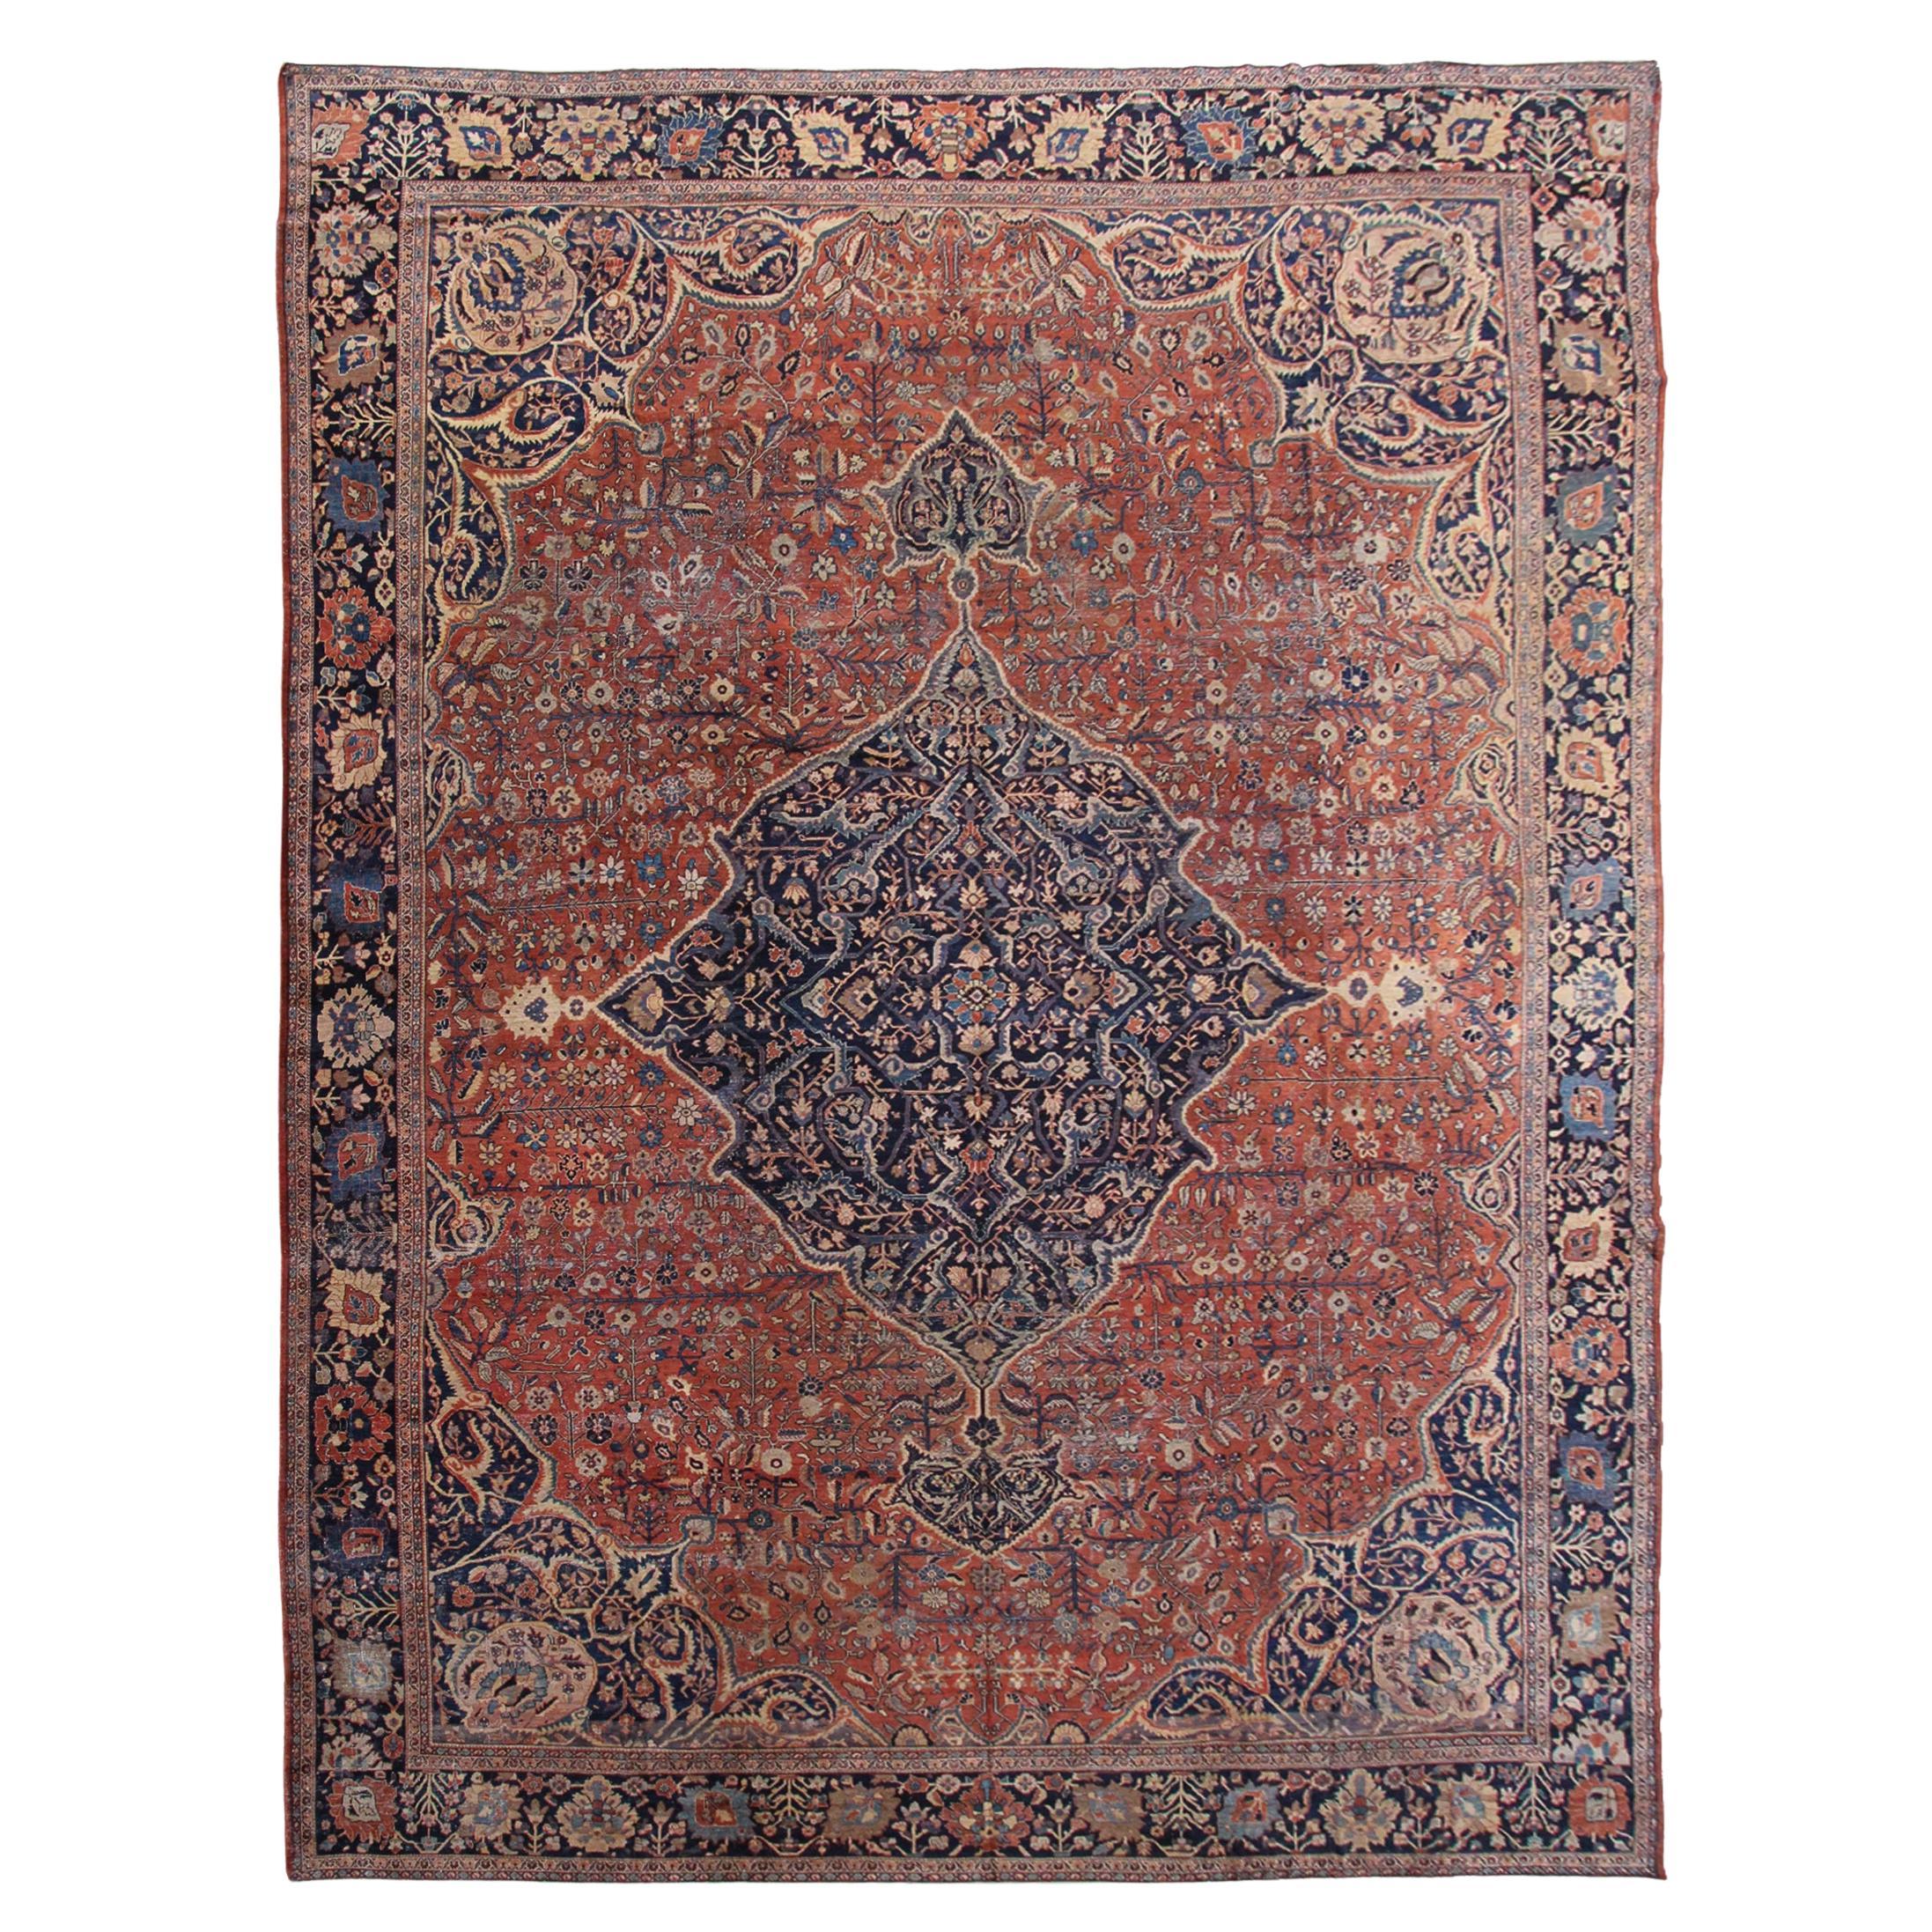 Grand tapis persan ancien de grande taille - Tapis persan ancien Farahan surdimensionné